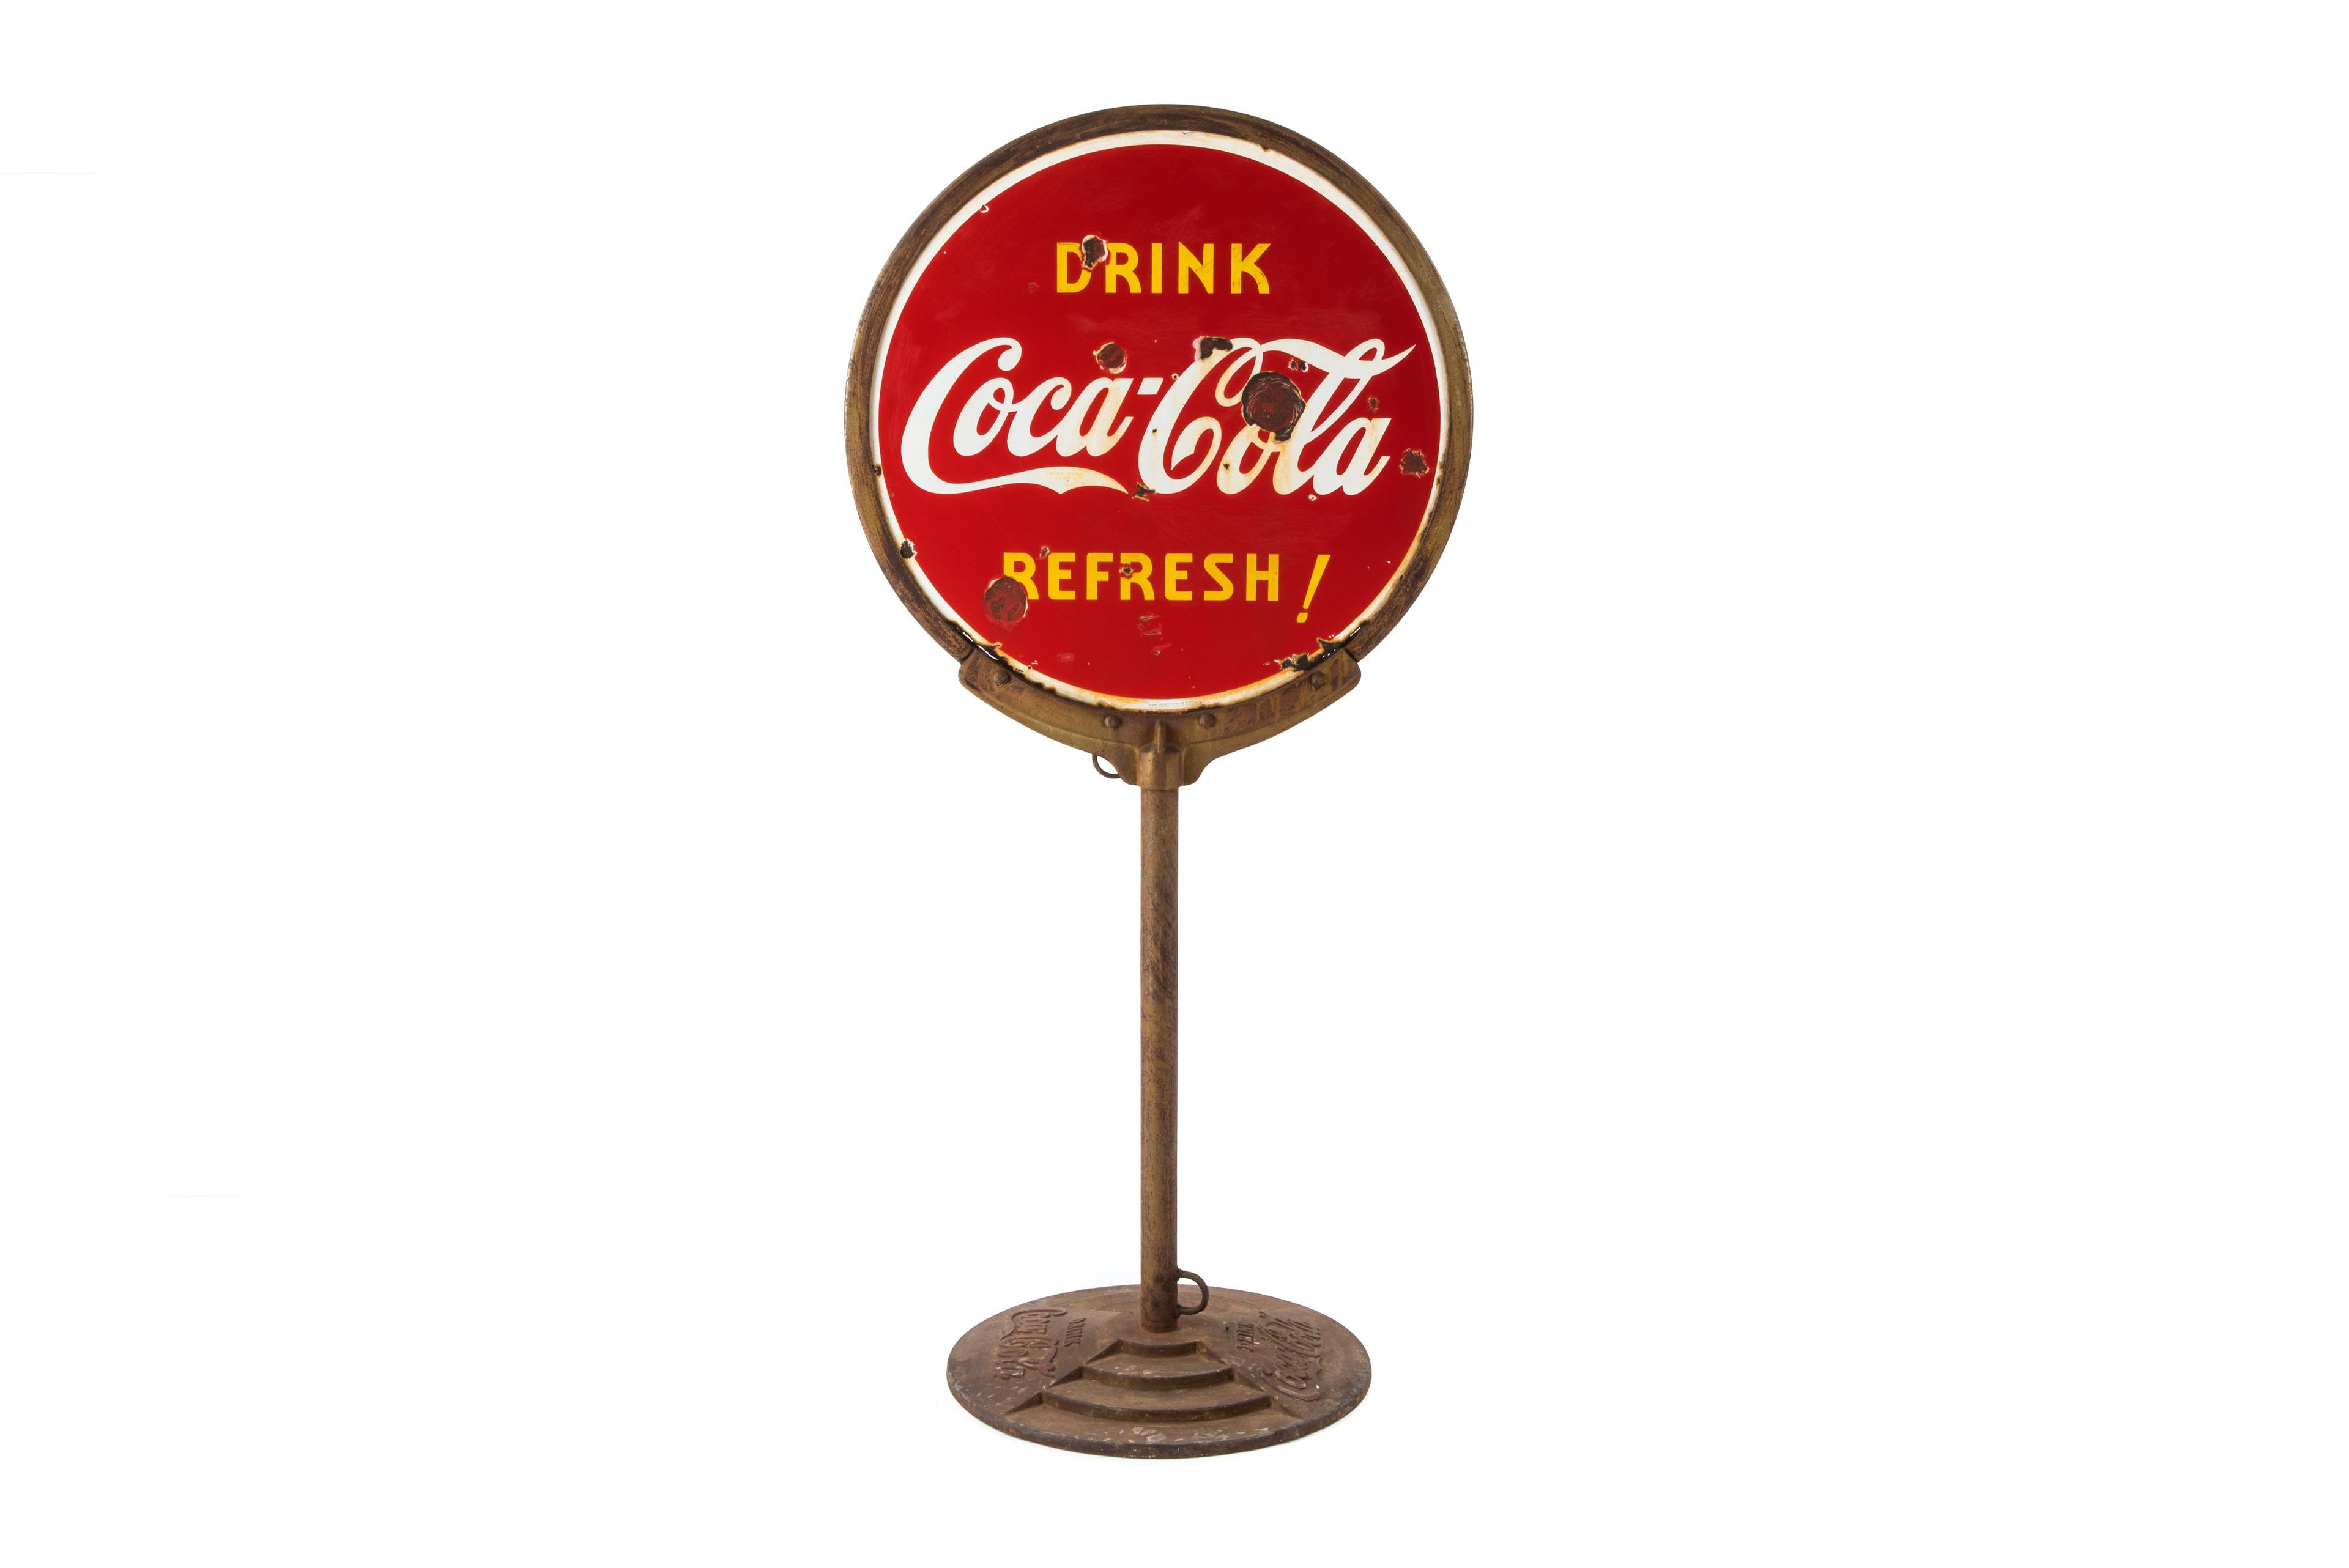 Drink Coca-Cola Refresh! Porcelain Curb Sign